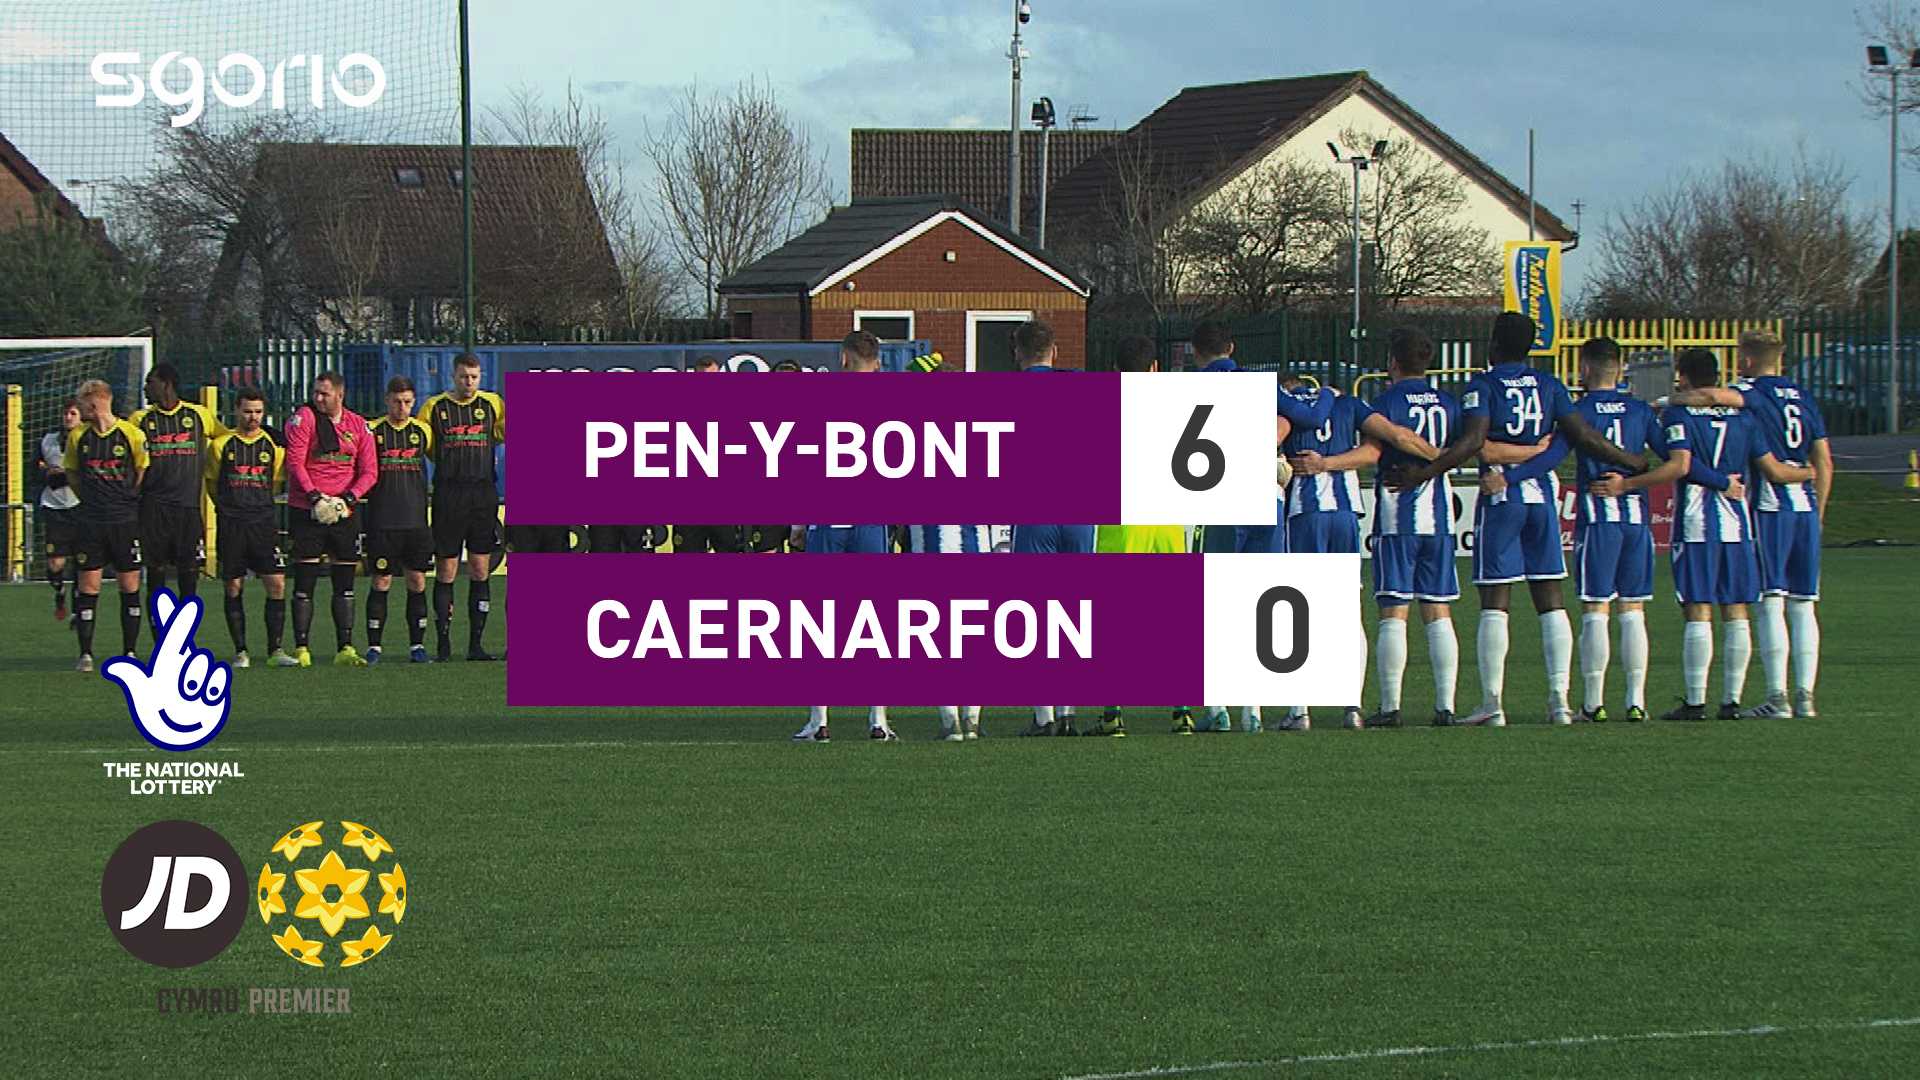 Pen-y-bont 6-0 Caernarfon